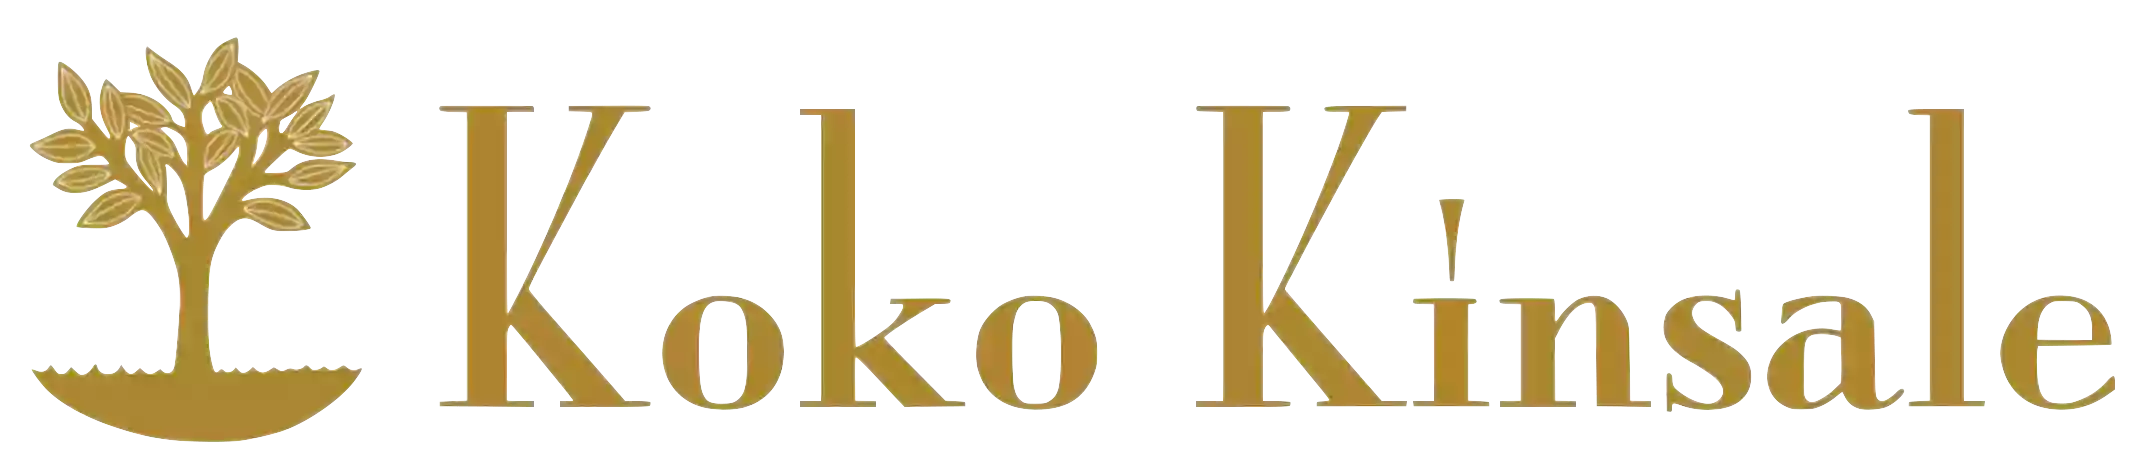 Koko Kinsale